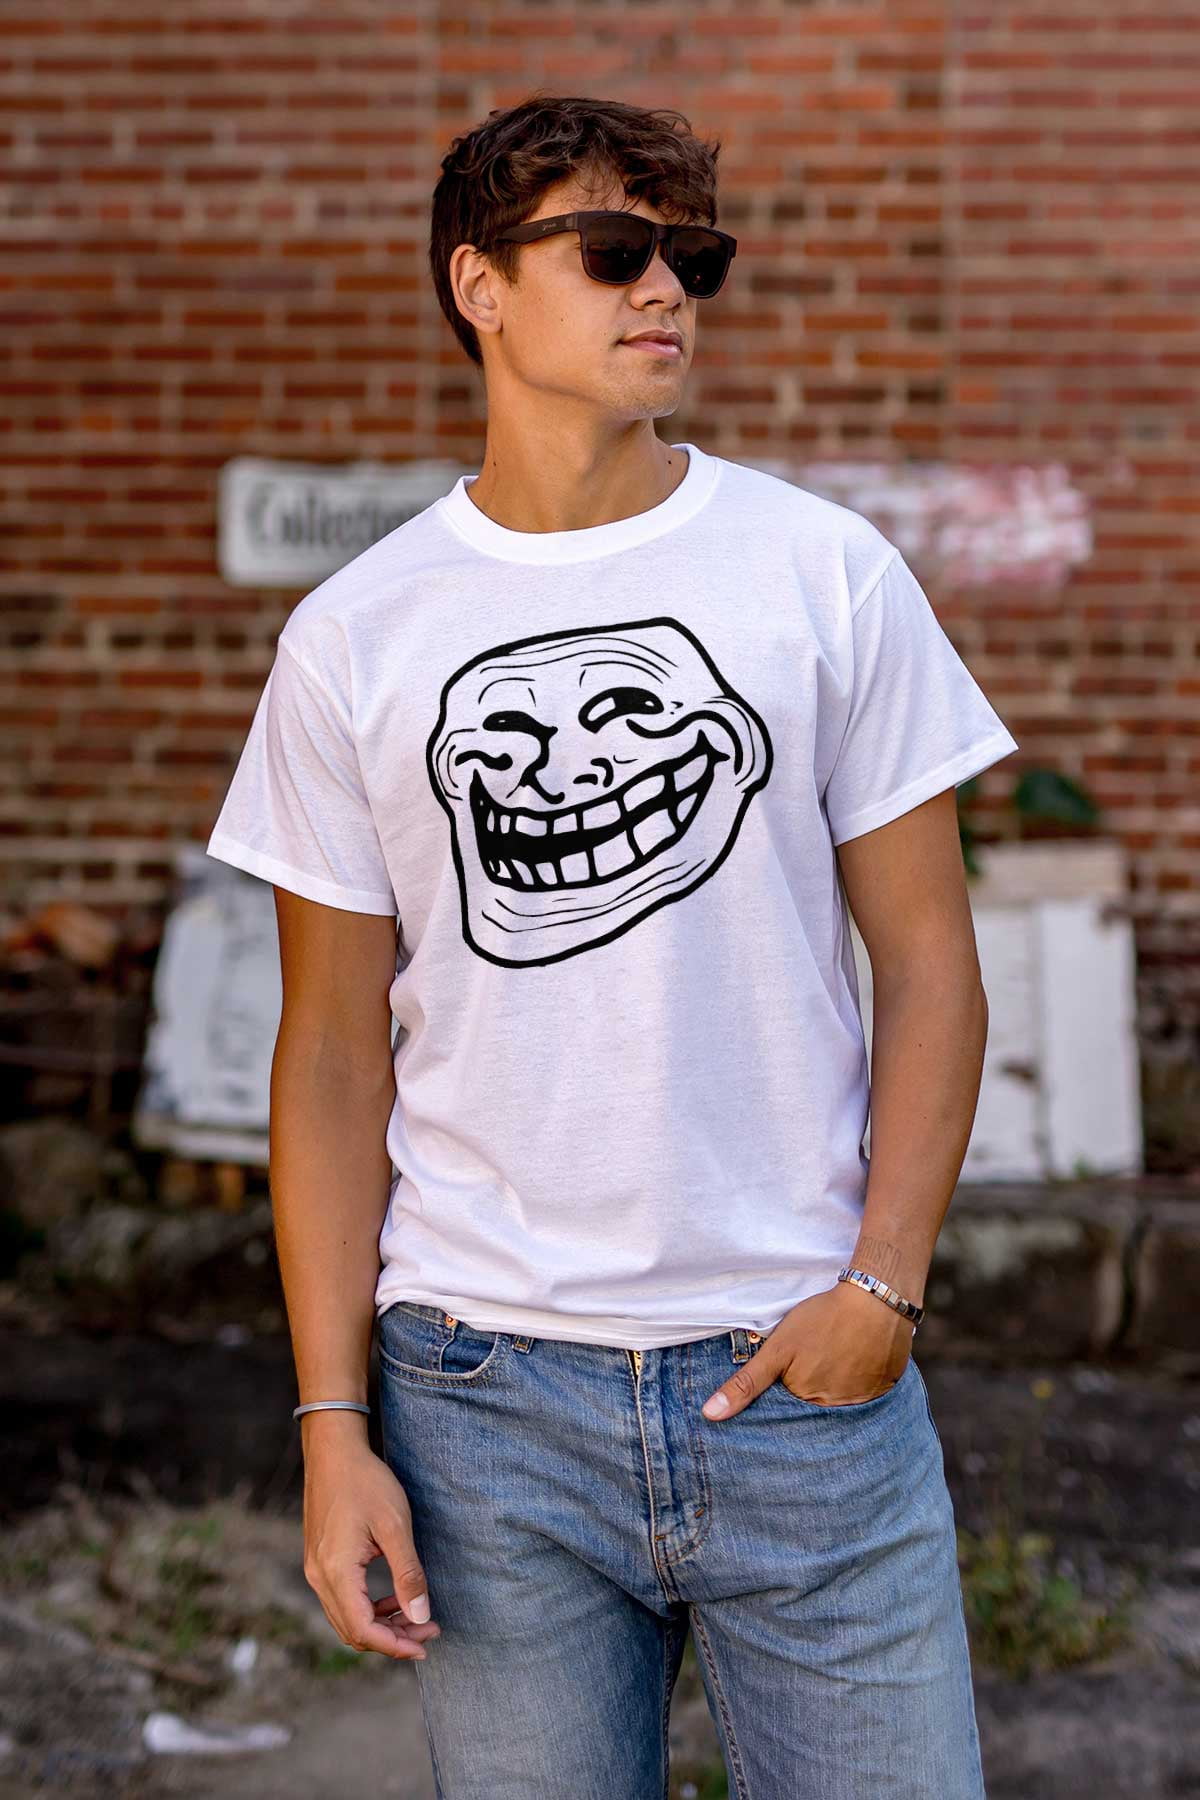 Troll Face Problem Big Smiley Meme Long Sleeve TShirt Men Women Brisco  Brands L 